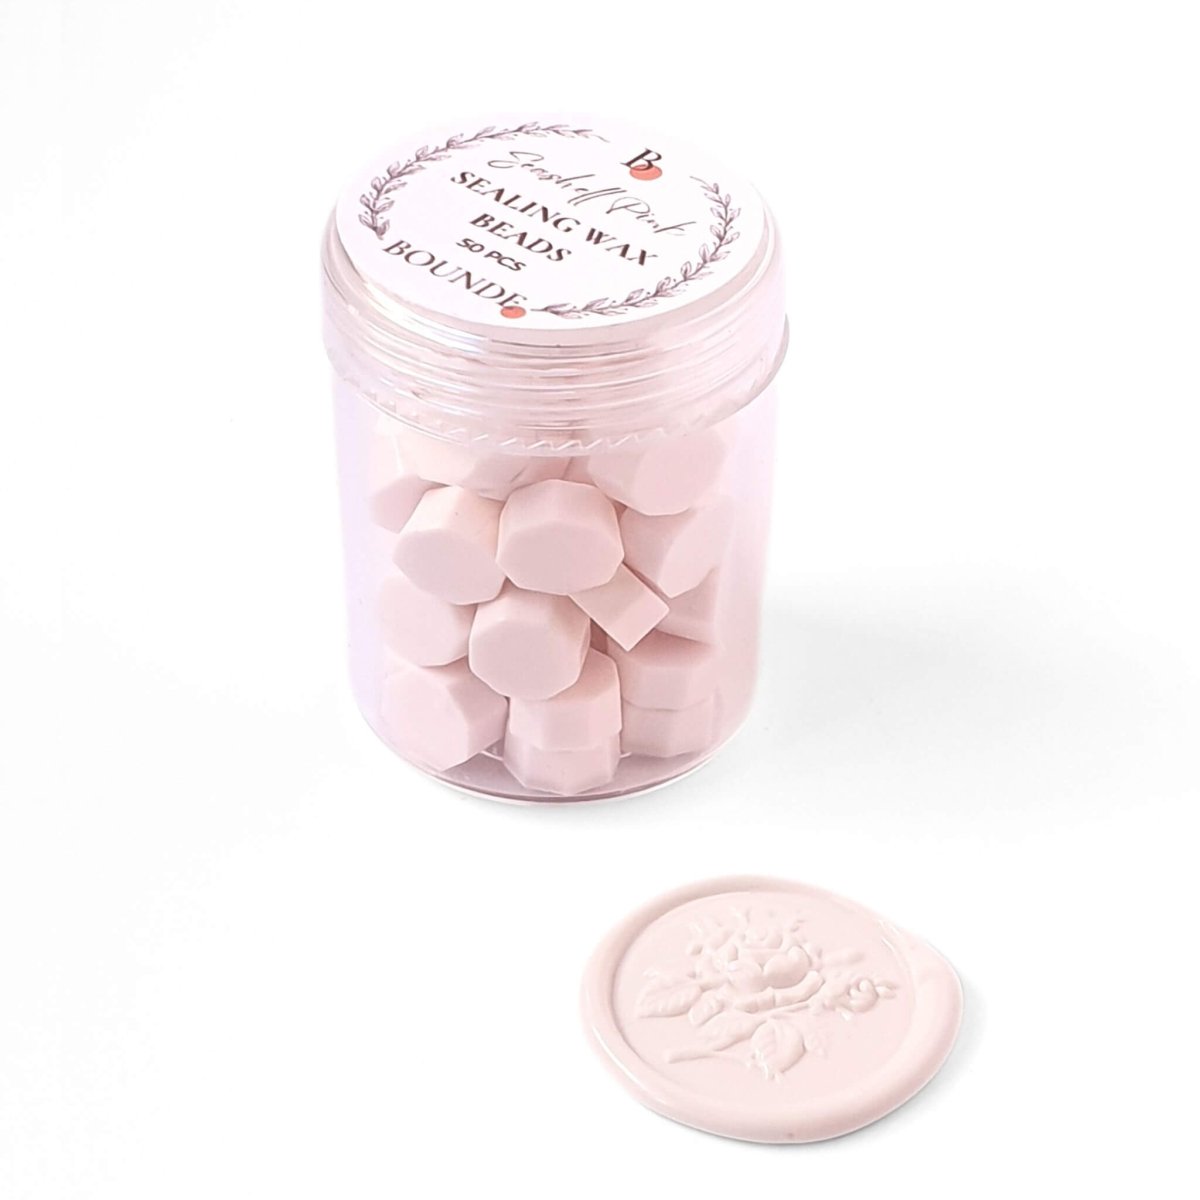 light pink wax seal beads in jar